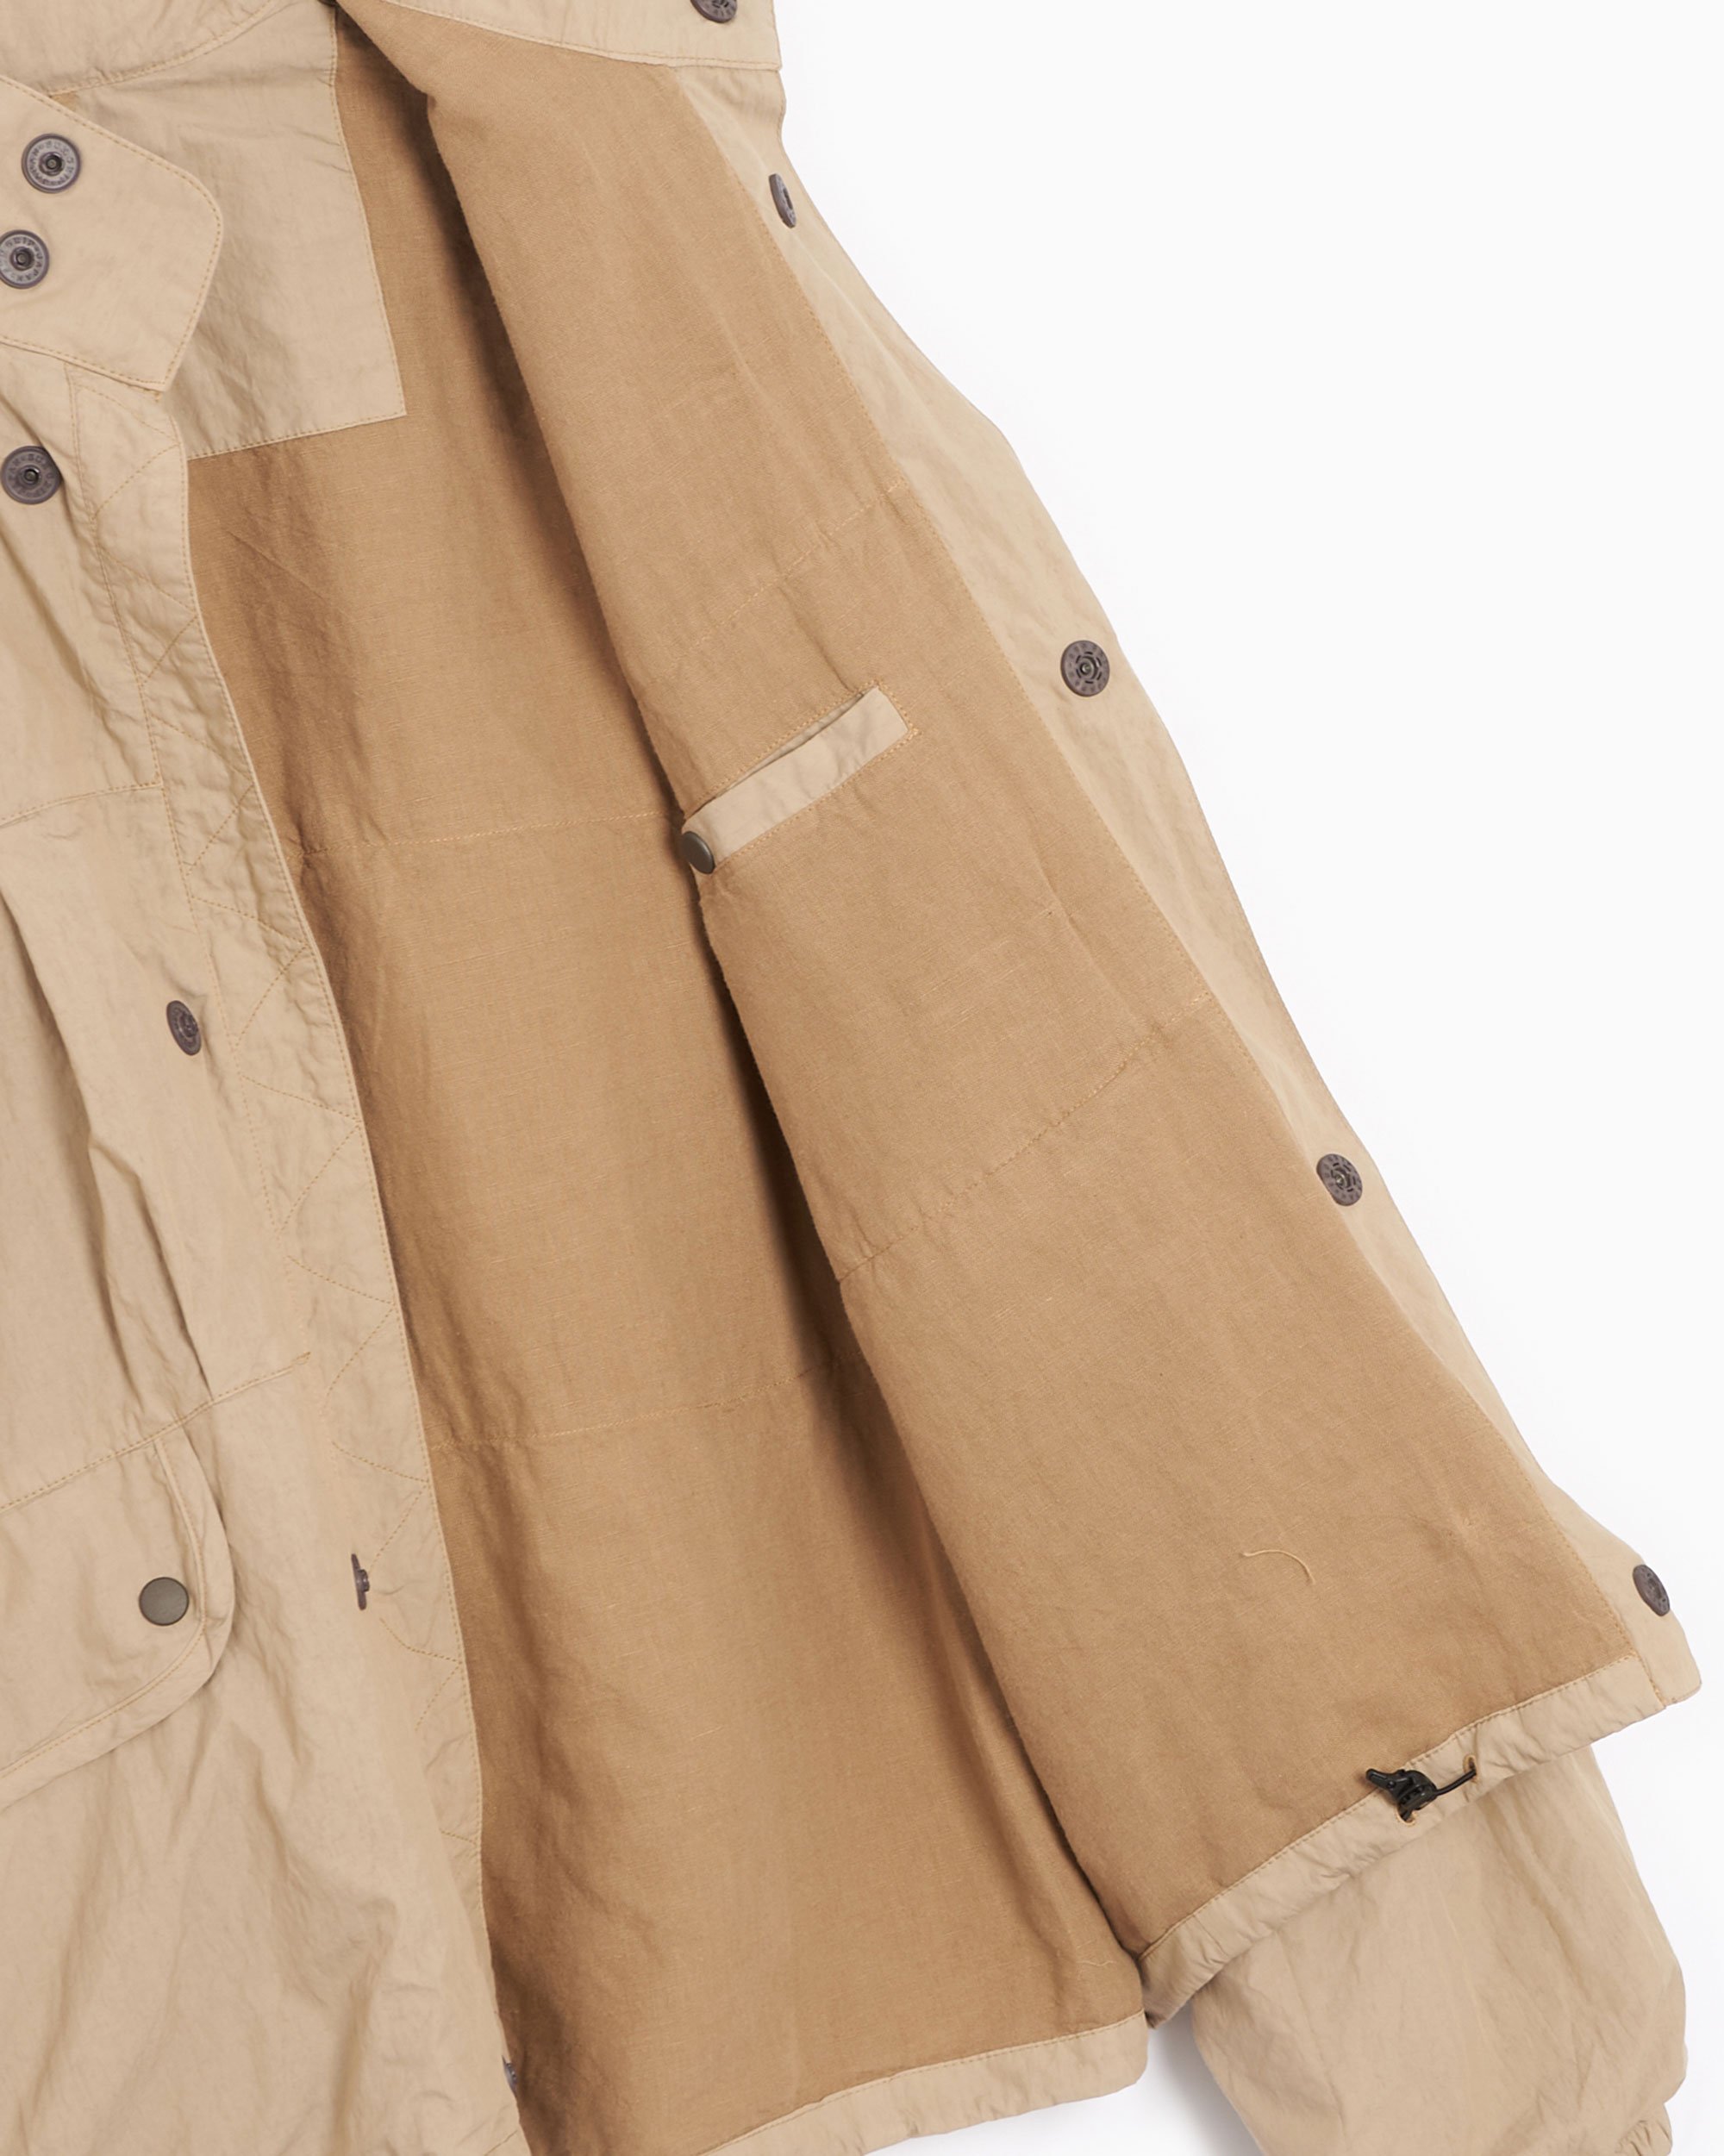 Our Legacy Exhale Men's Puffer Jacket Beige M2231EMS | FOOTDISTRICT